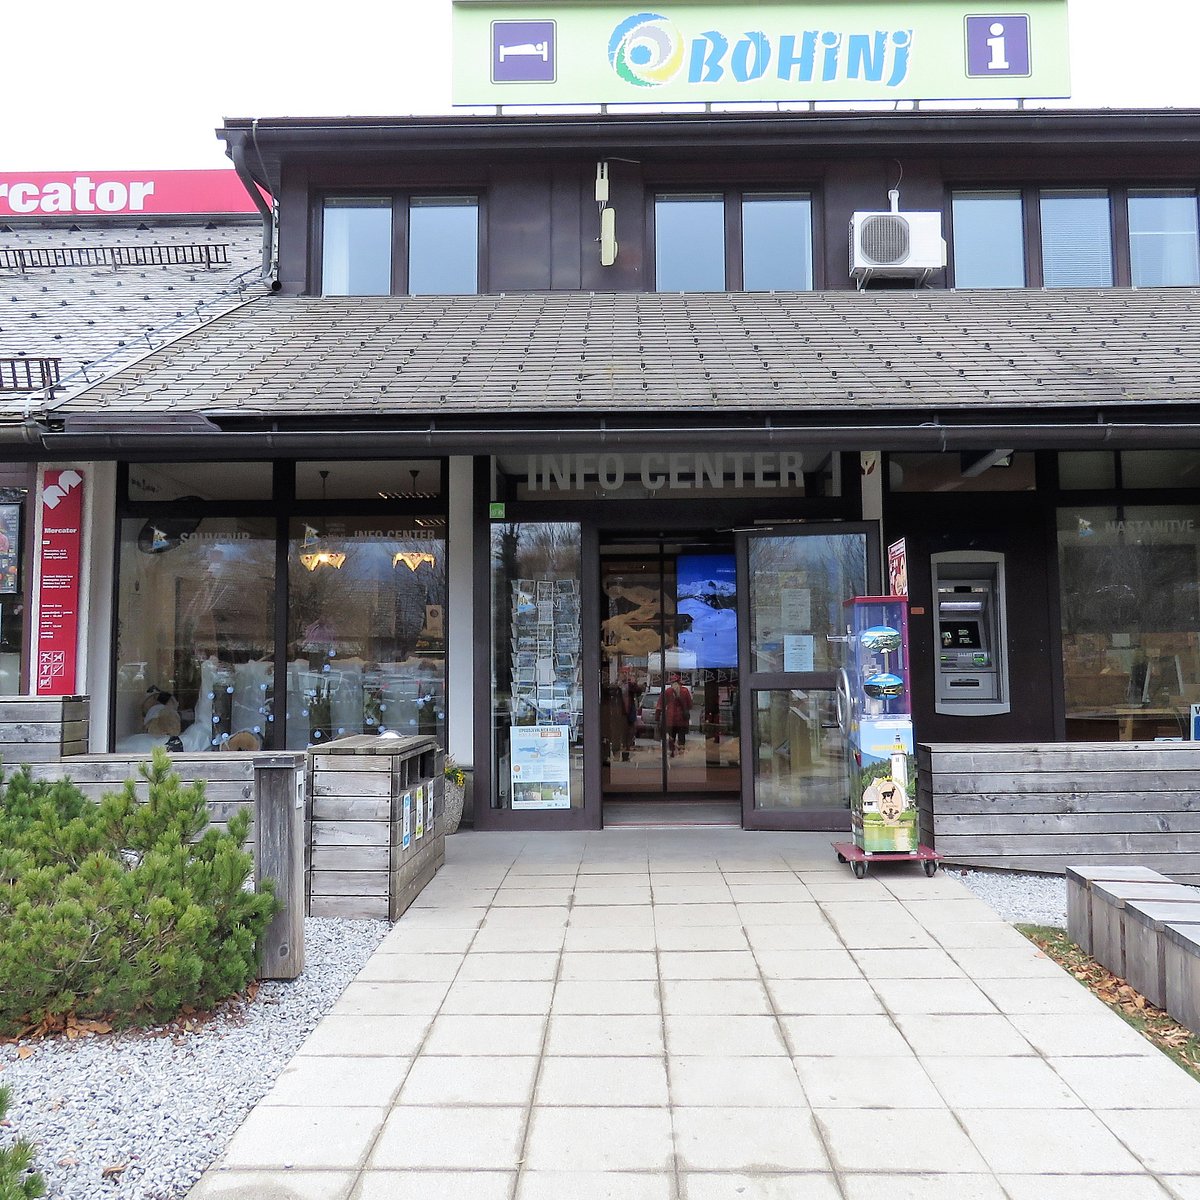 bohinj tourist information center